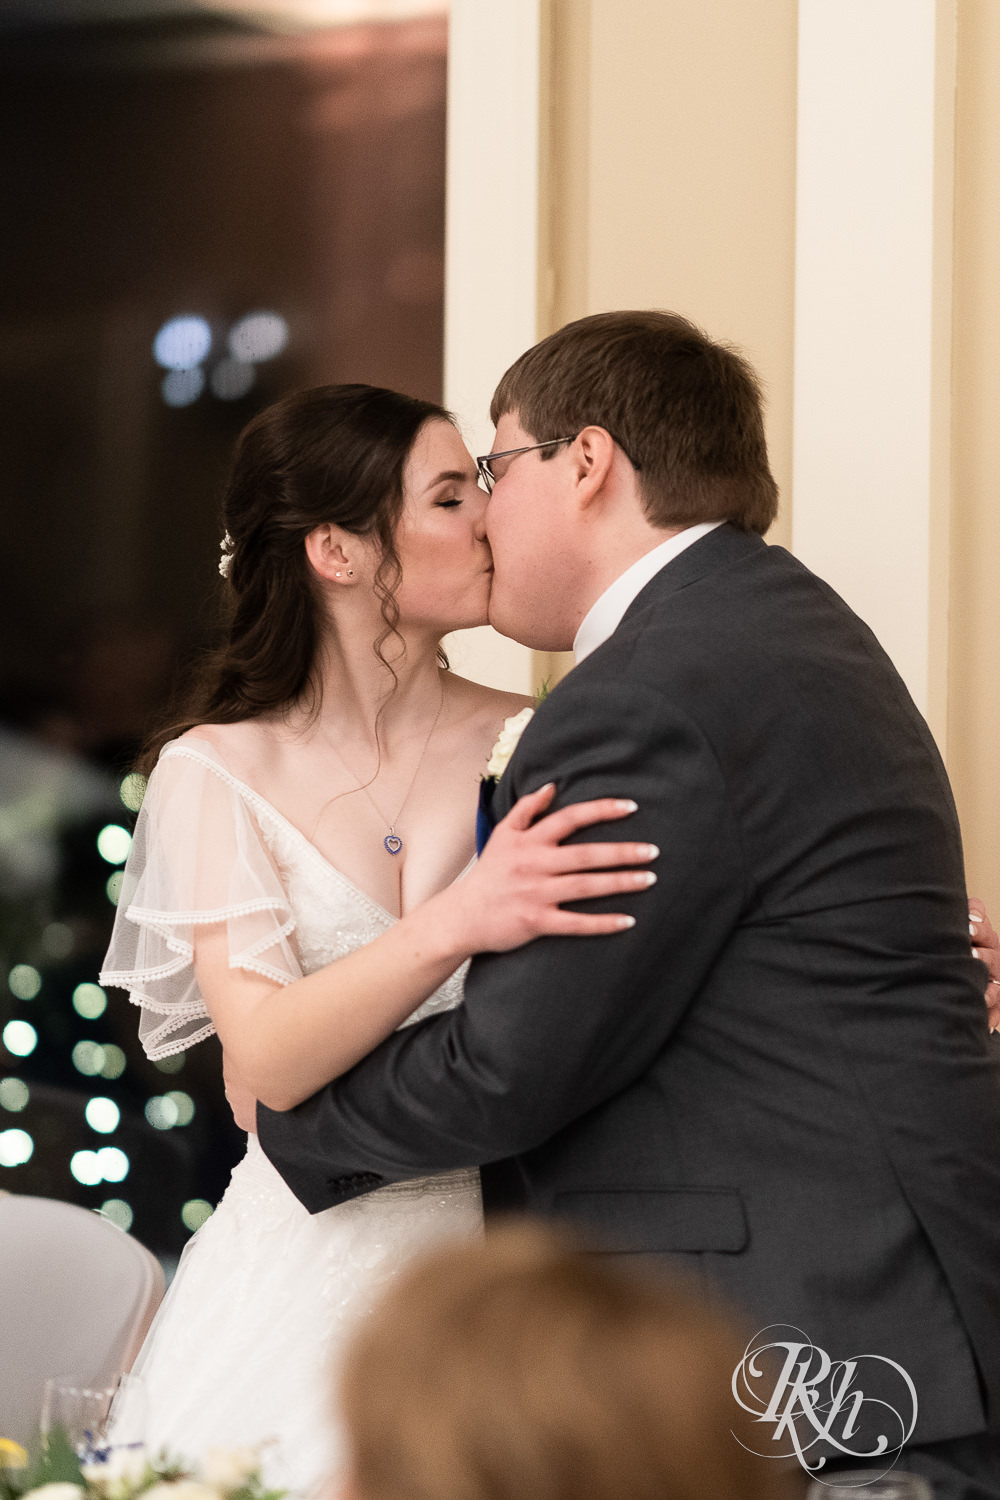 Bride and groom kiss at wedding reception at Minneapolis Golf Club in Saint Louis Park, Minnesota.